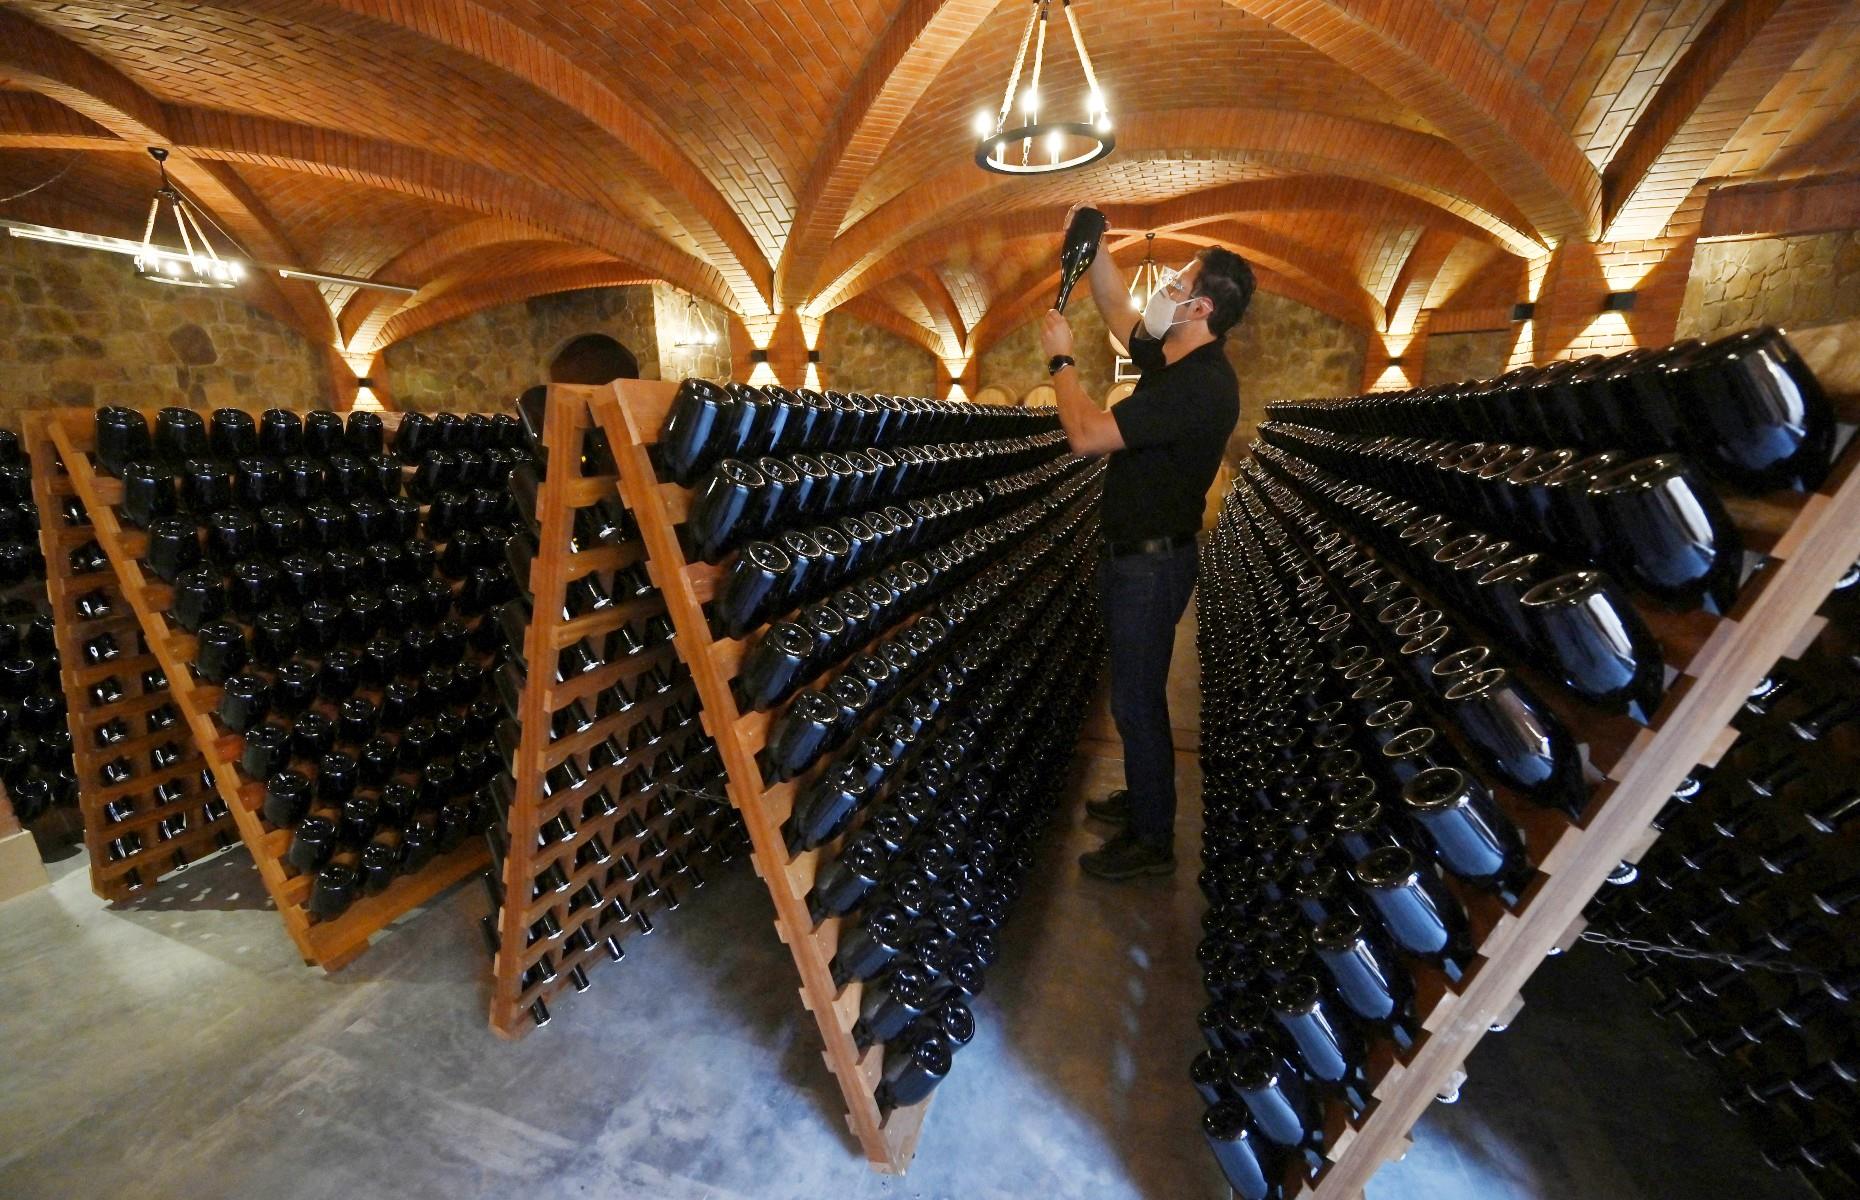 Rare Burgundy wine: $2.2 million (£1.6m)